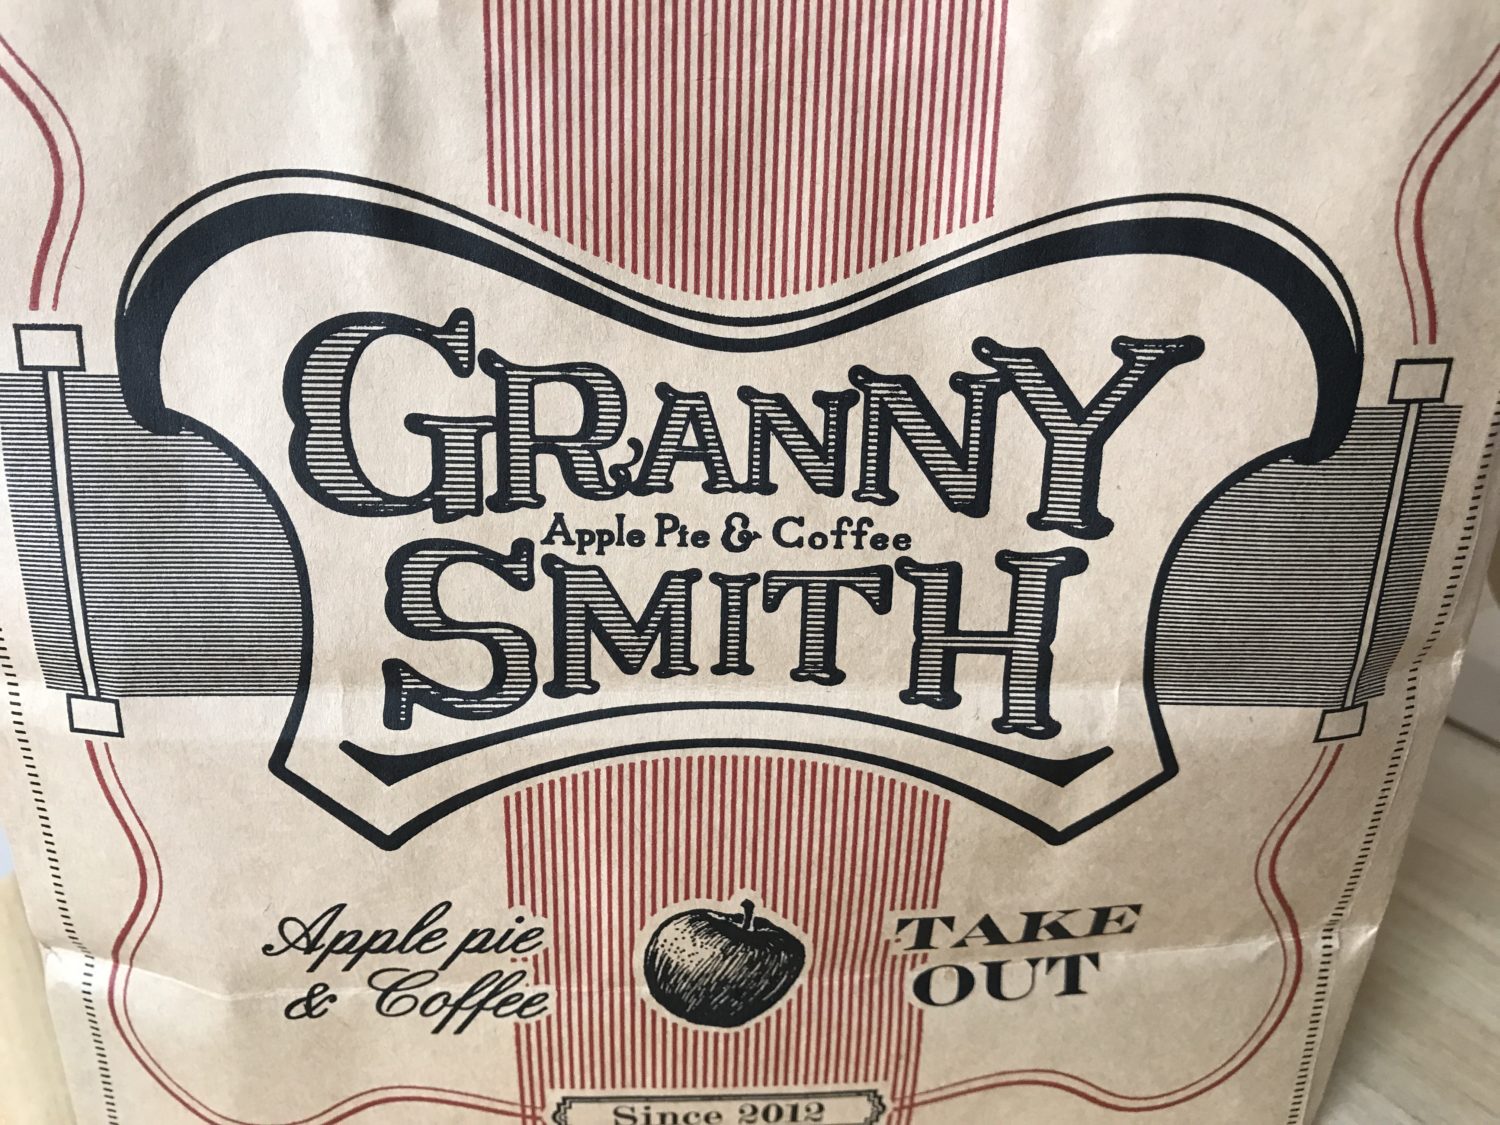 Granny Smith